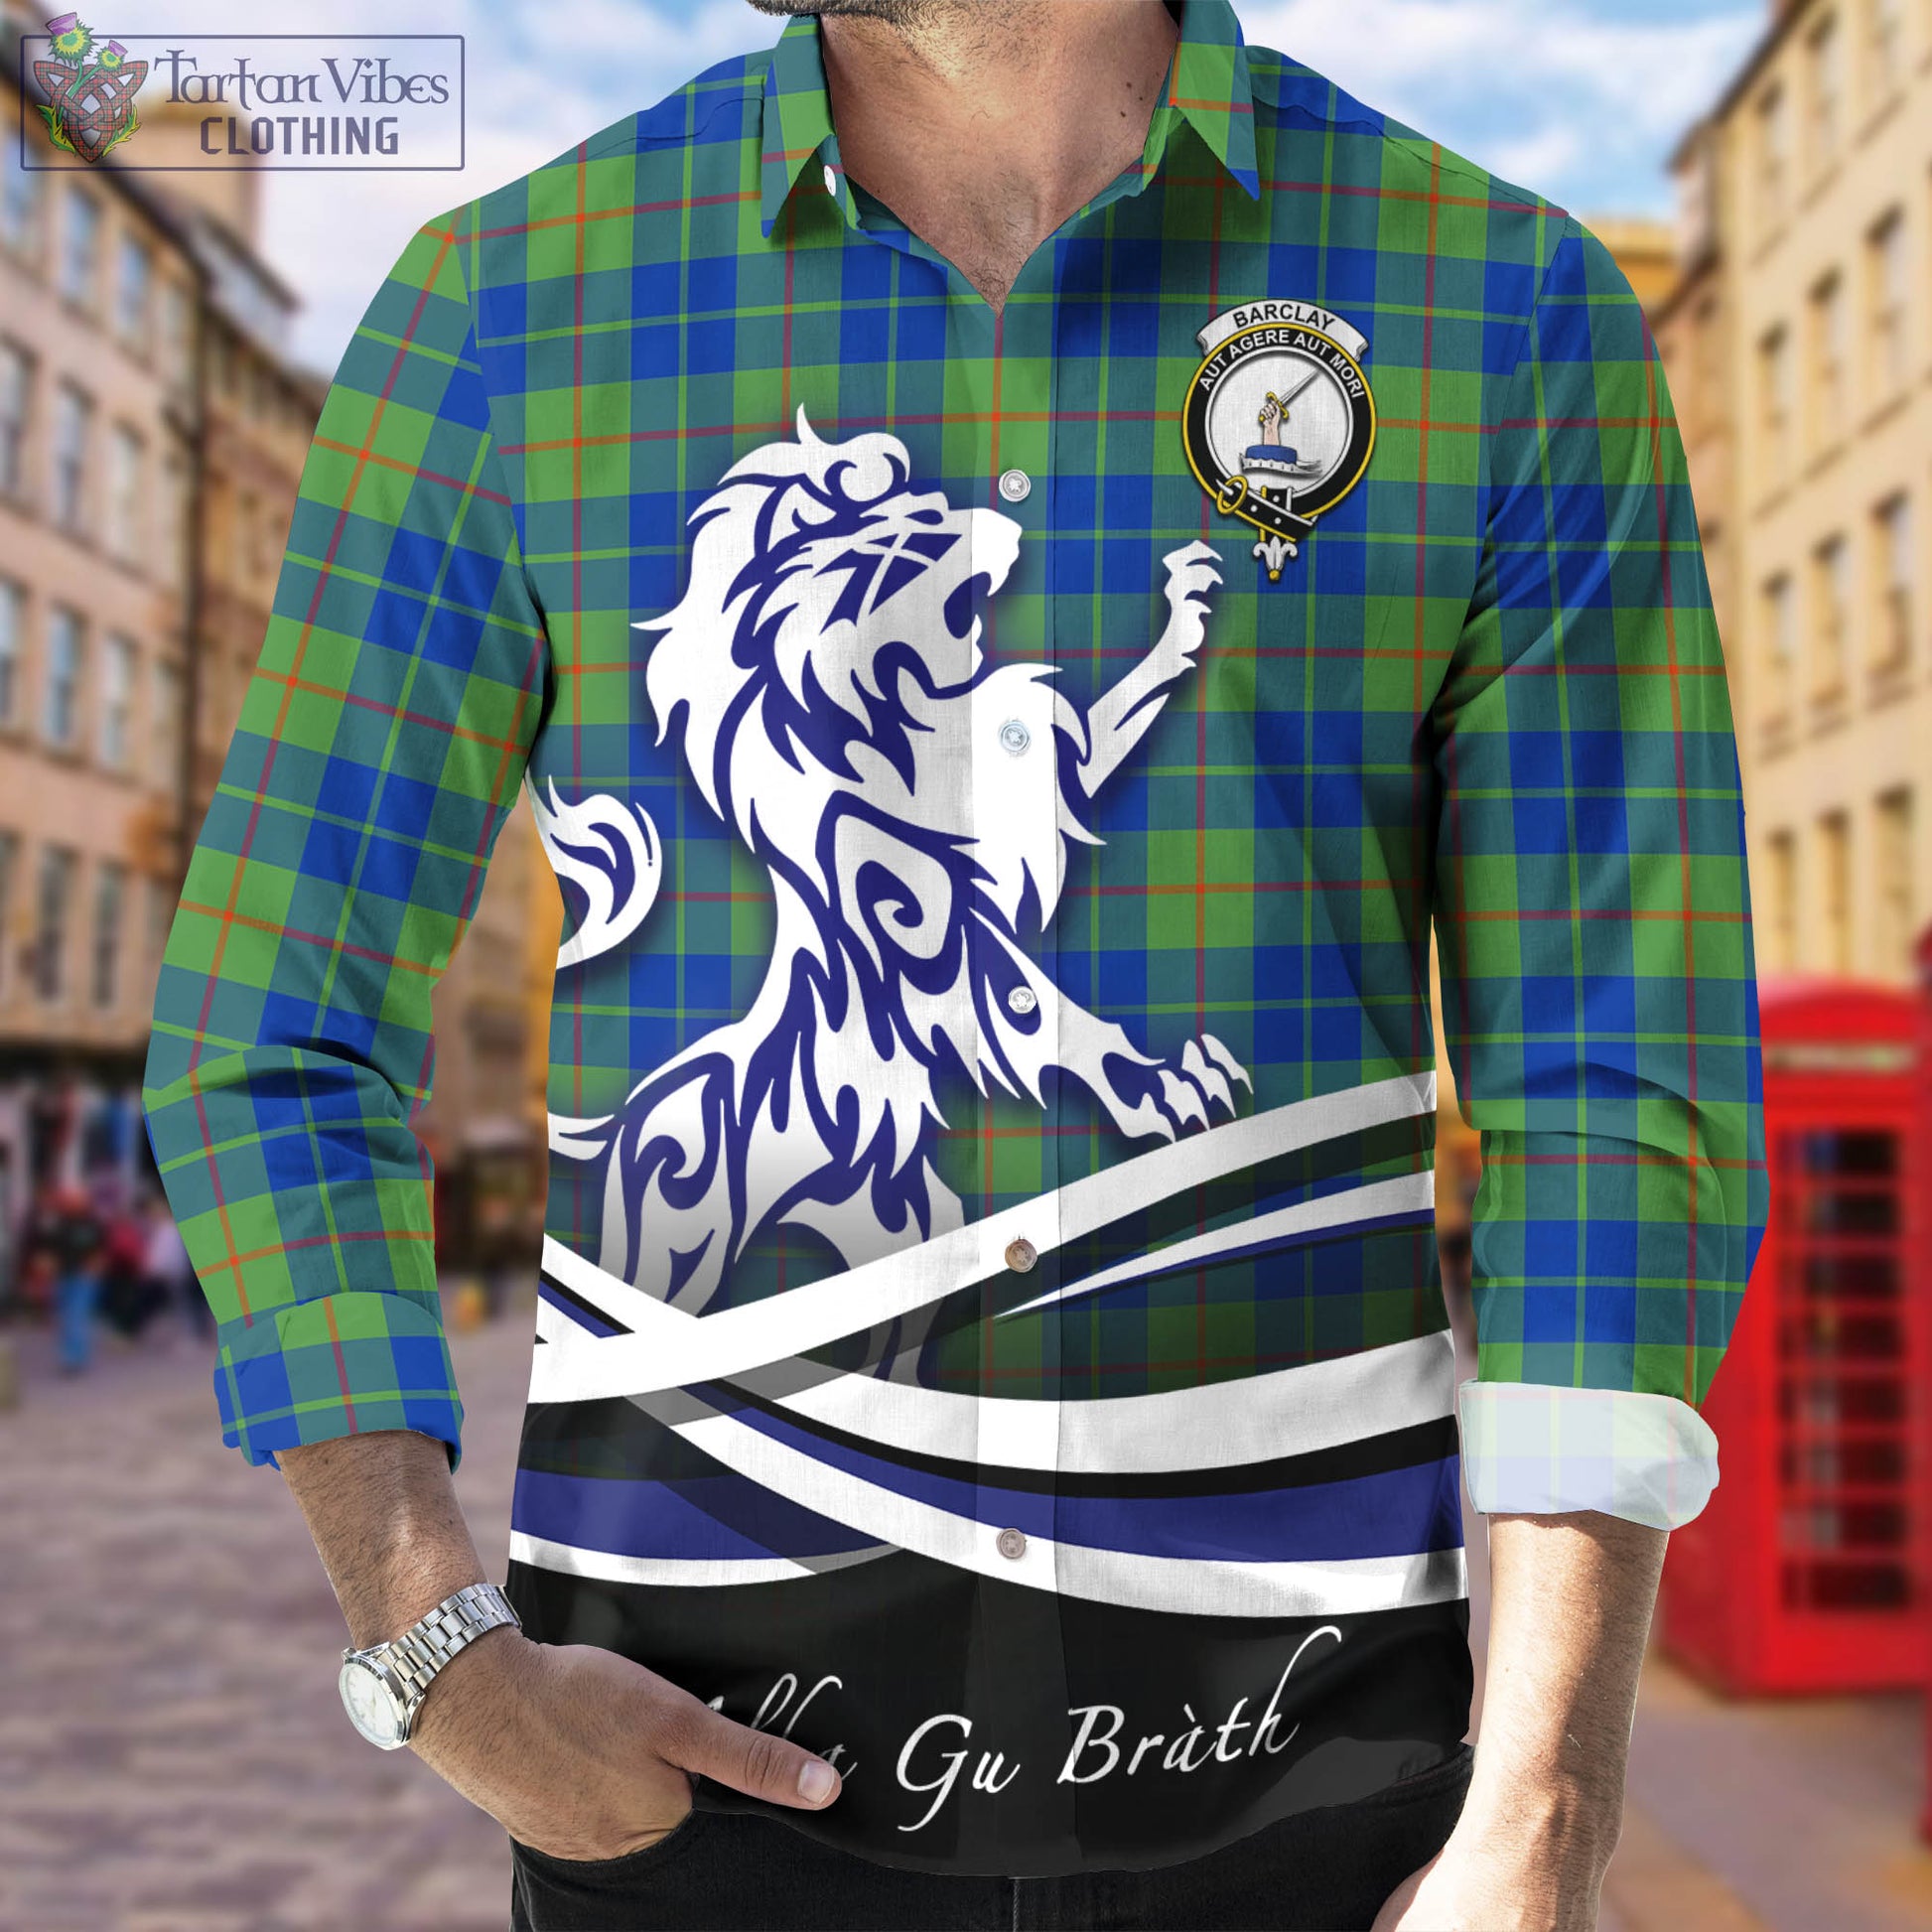 barclay-hunting-ancient-tartan-long-sleeve-button-up-shirt-with-alba-gu-brath-regal-lion-emblem